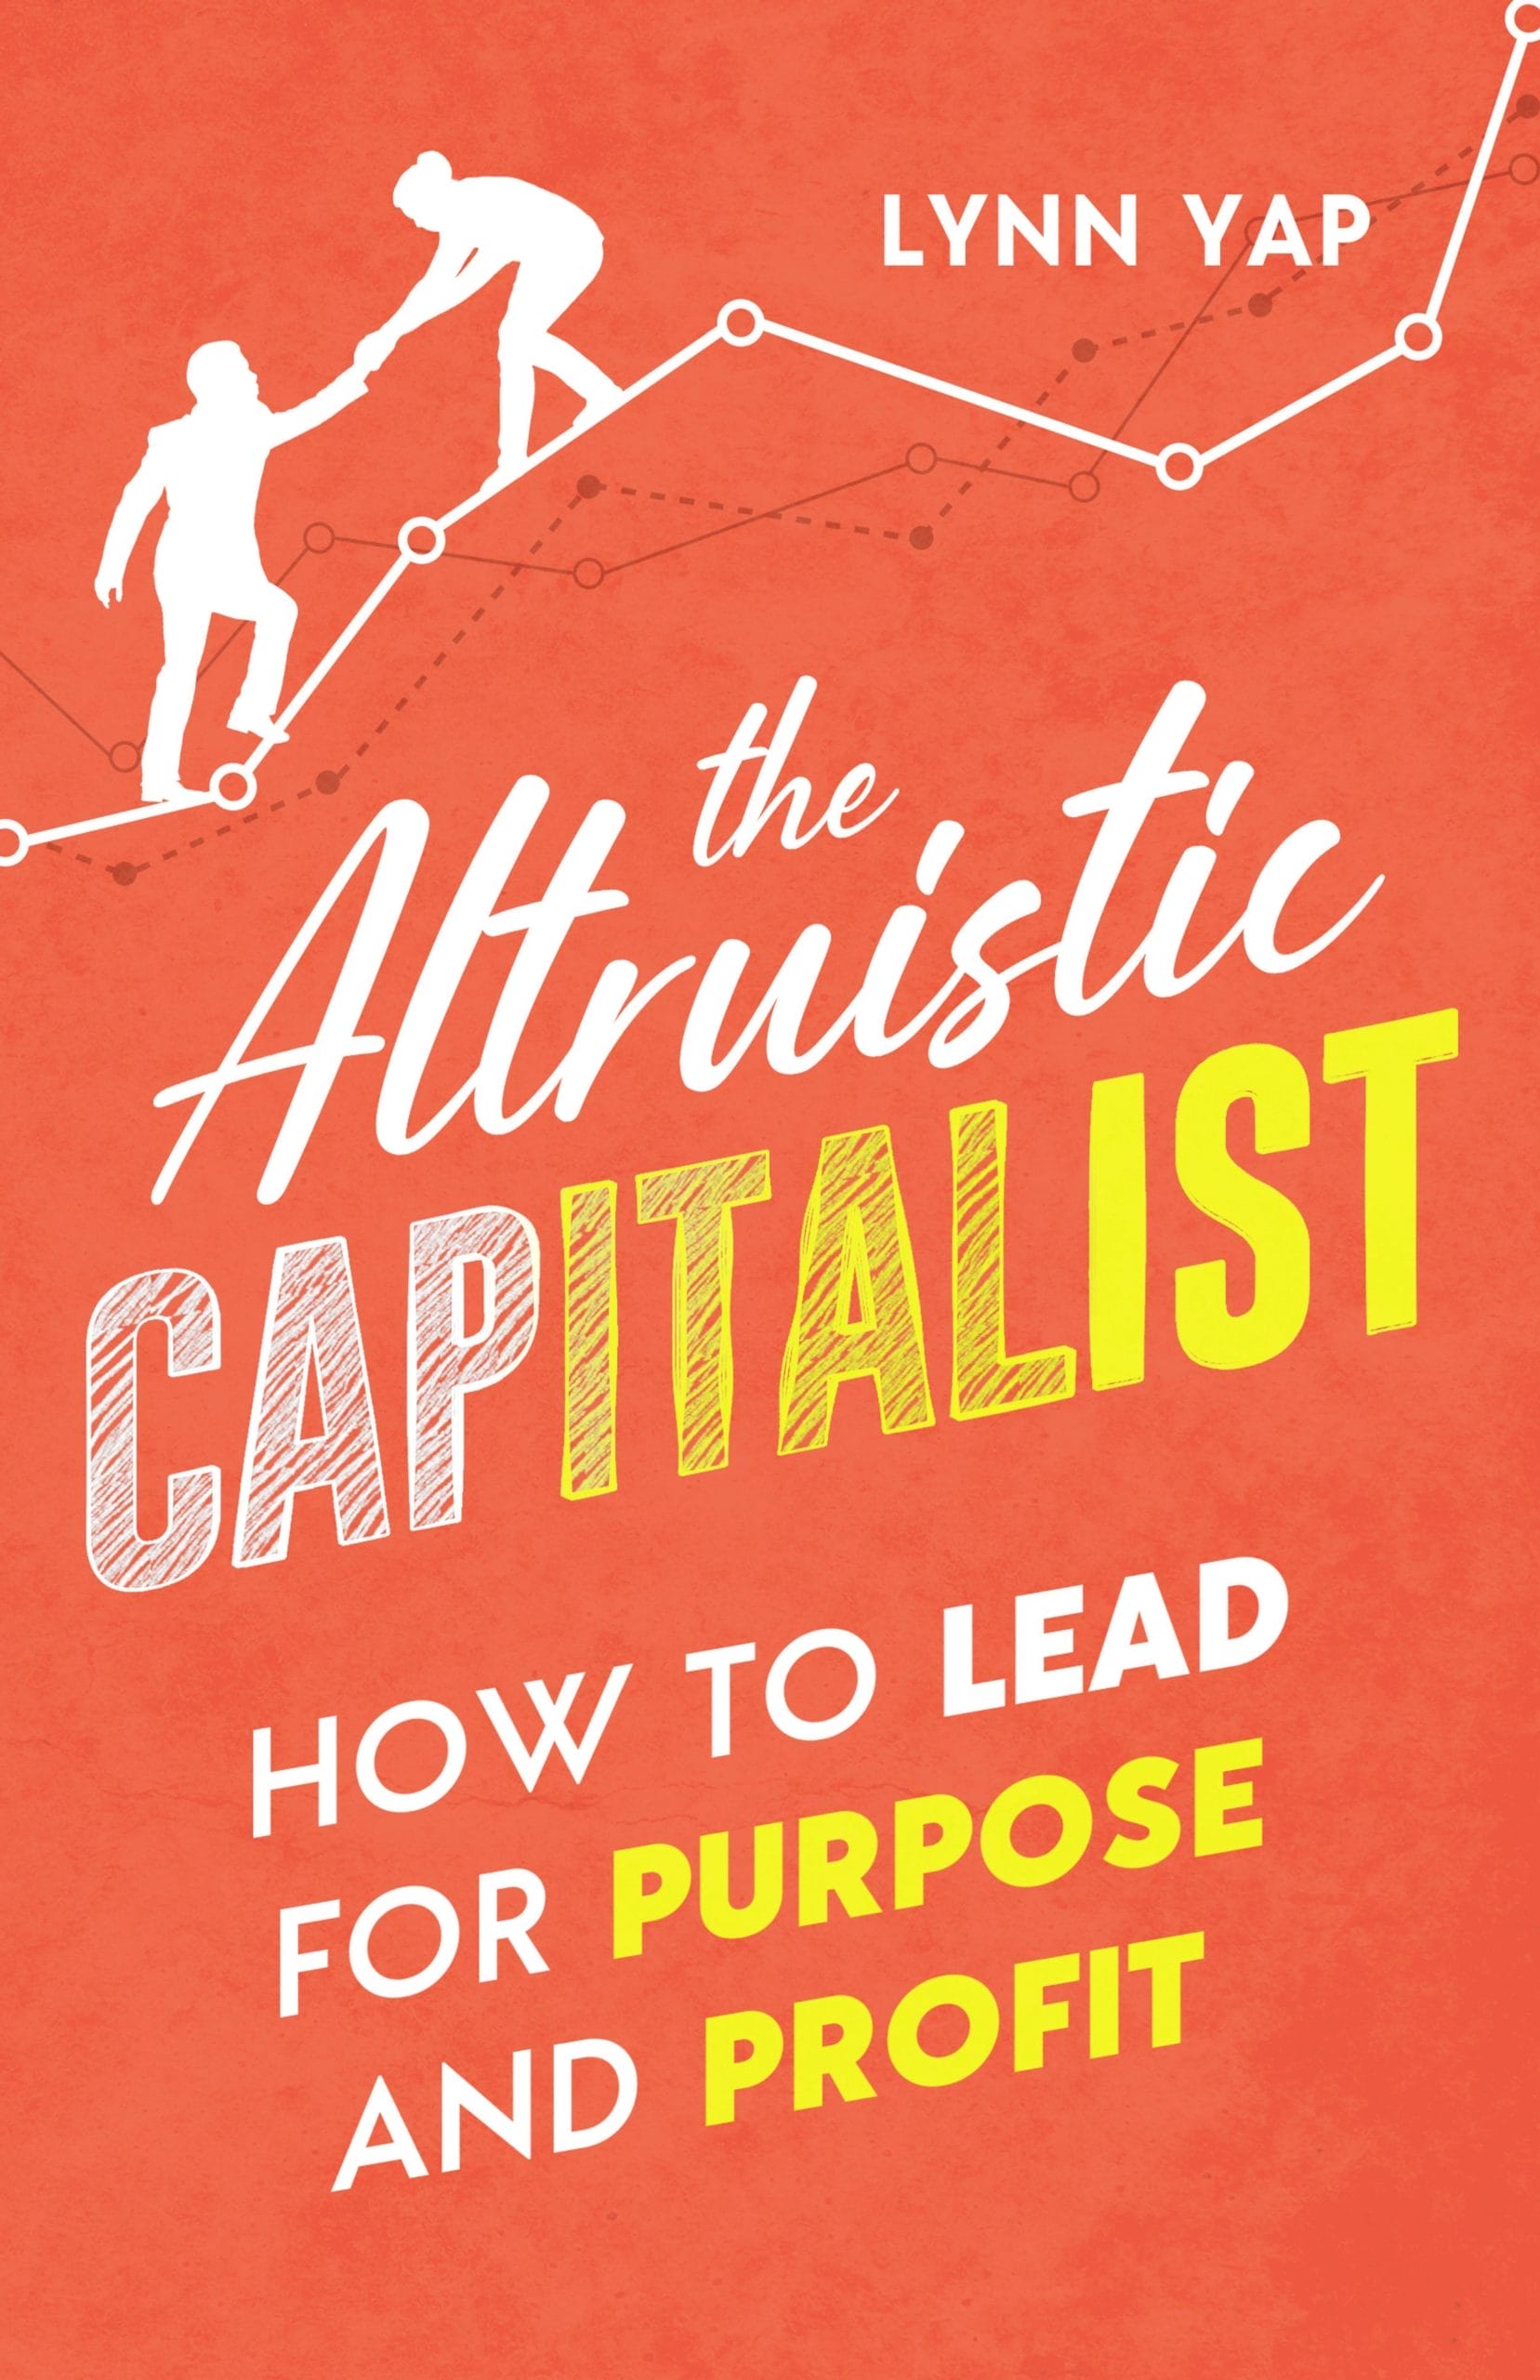 Book titled "The Altruistic Capitalist"